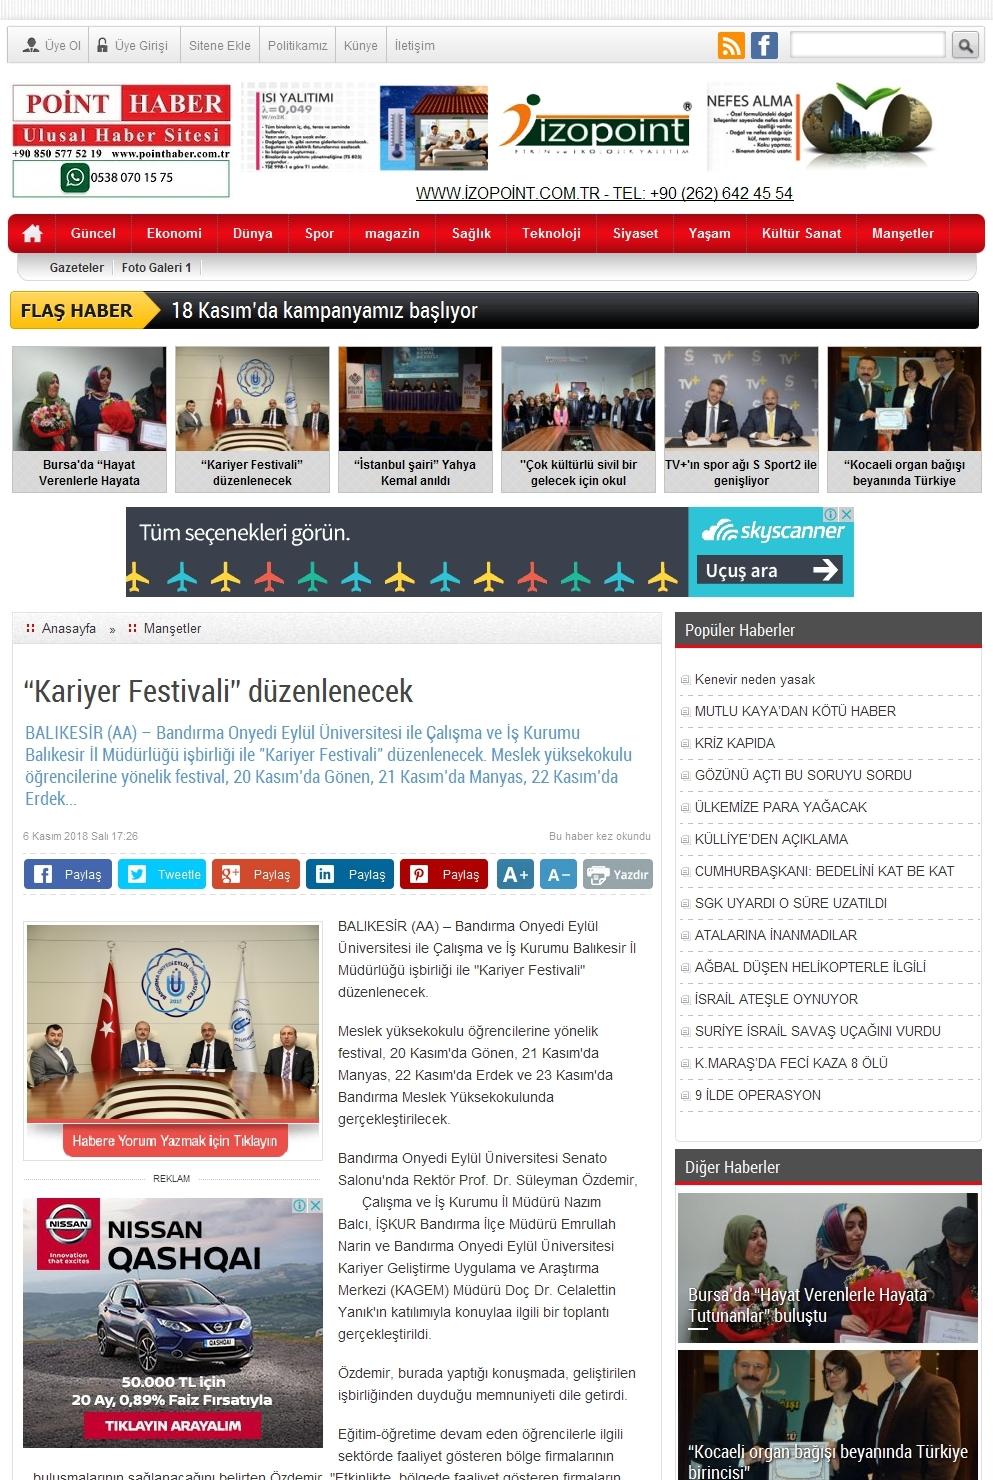 œkariyer FESTIVALI DÜZENLENECEK Portal Adres : www.pointhaber.com.